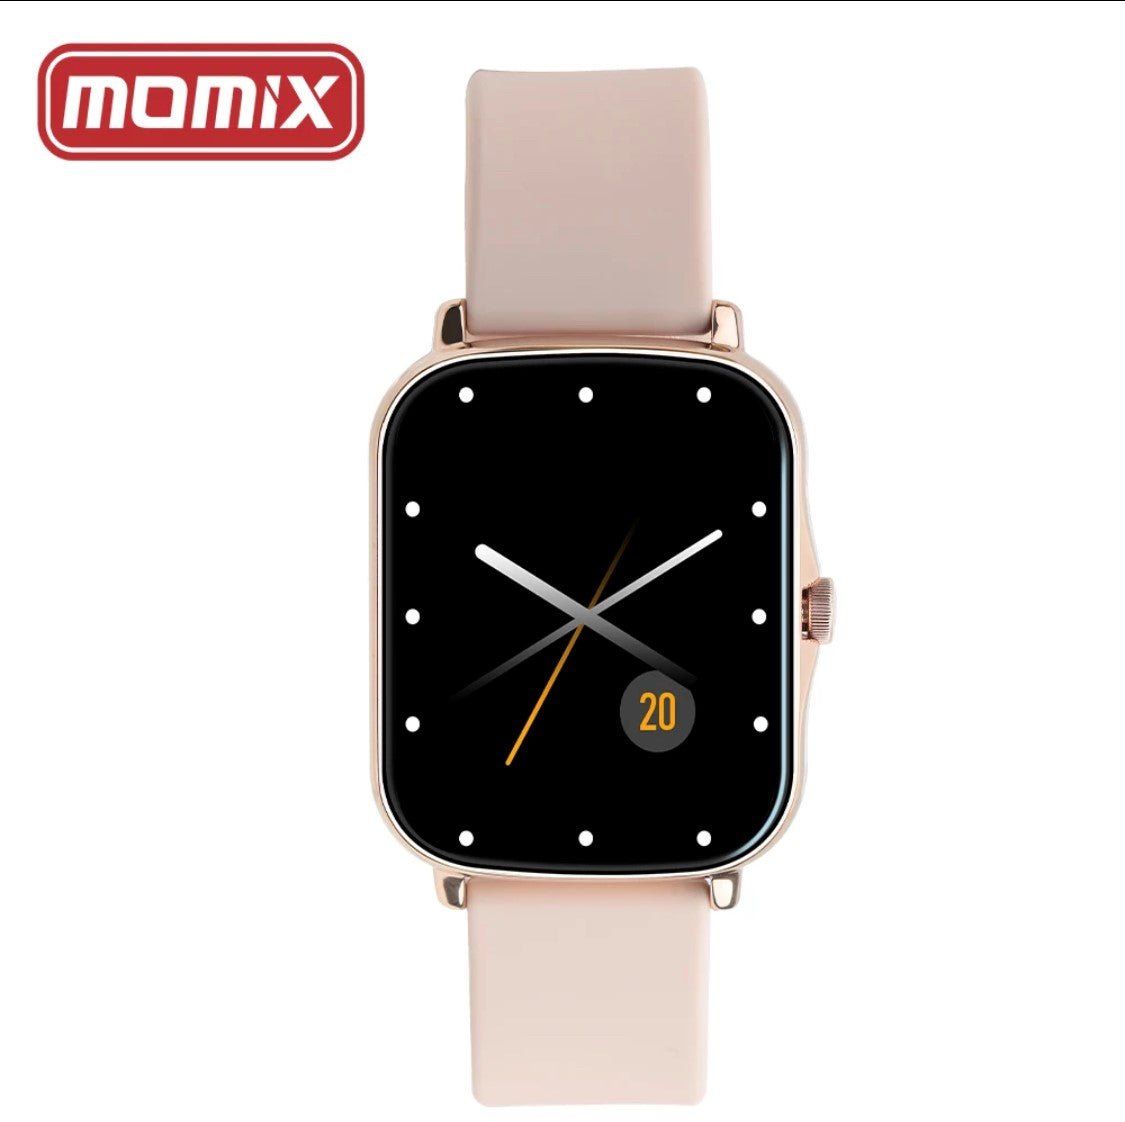 MOMIX M2  Gold Smart Watch South Africa